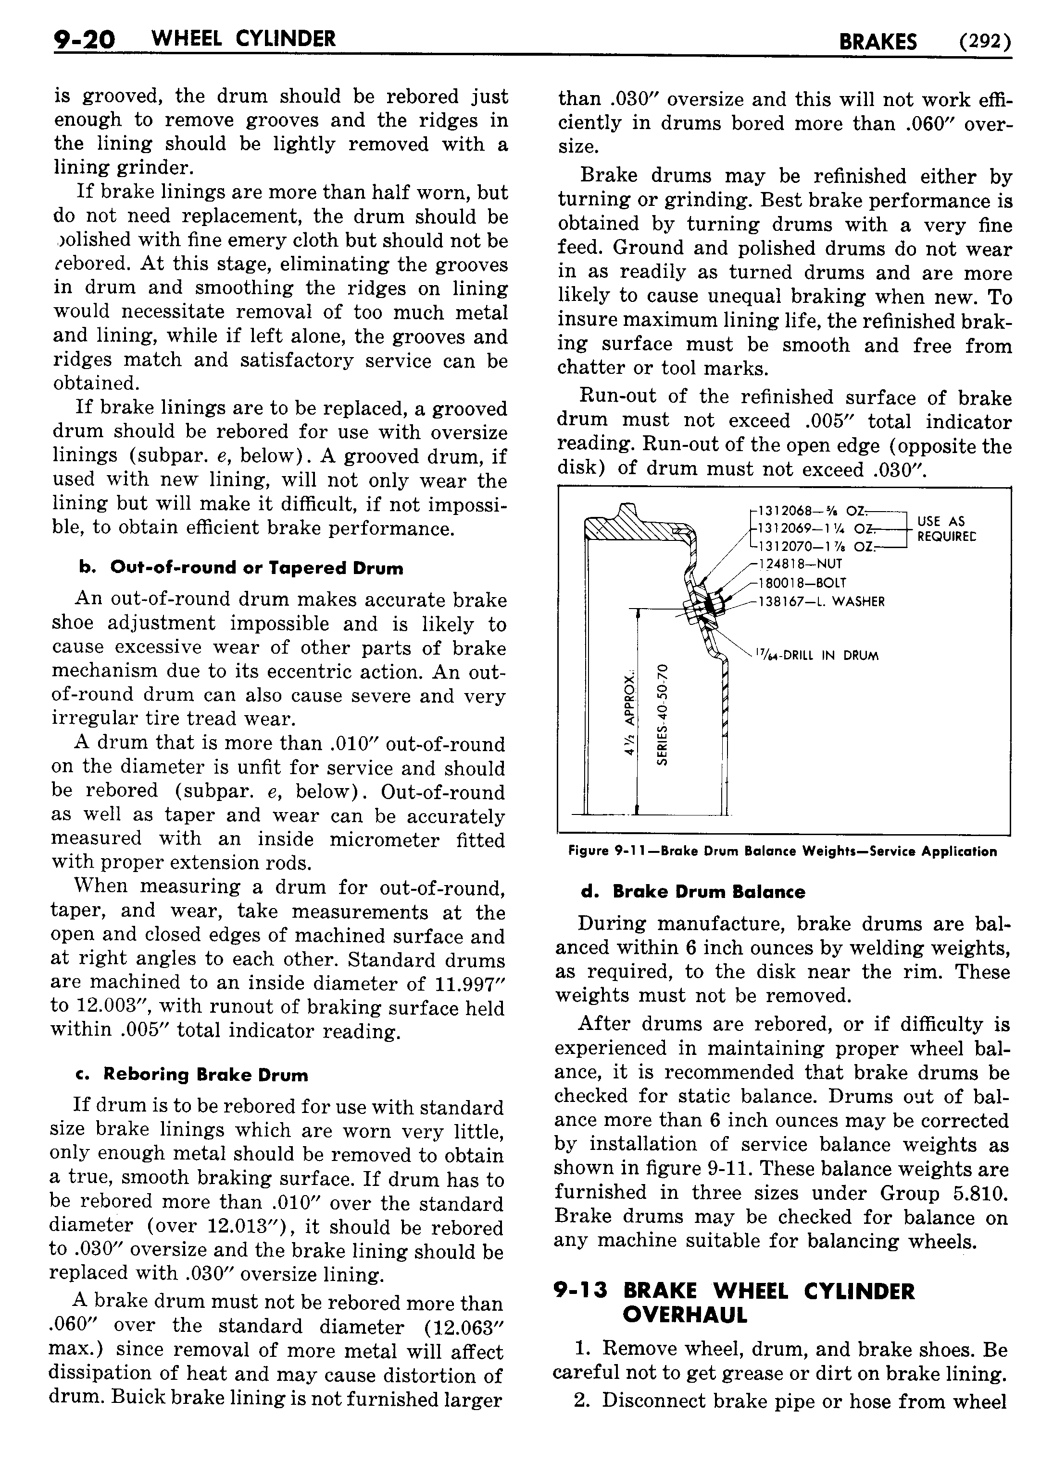 n_10 1955 Buick Shop Manual - Brakes-020-020.jpg